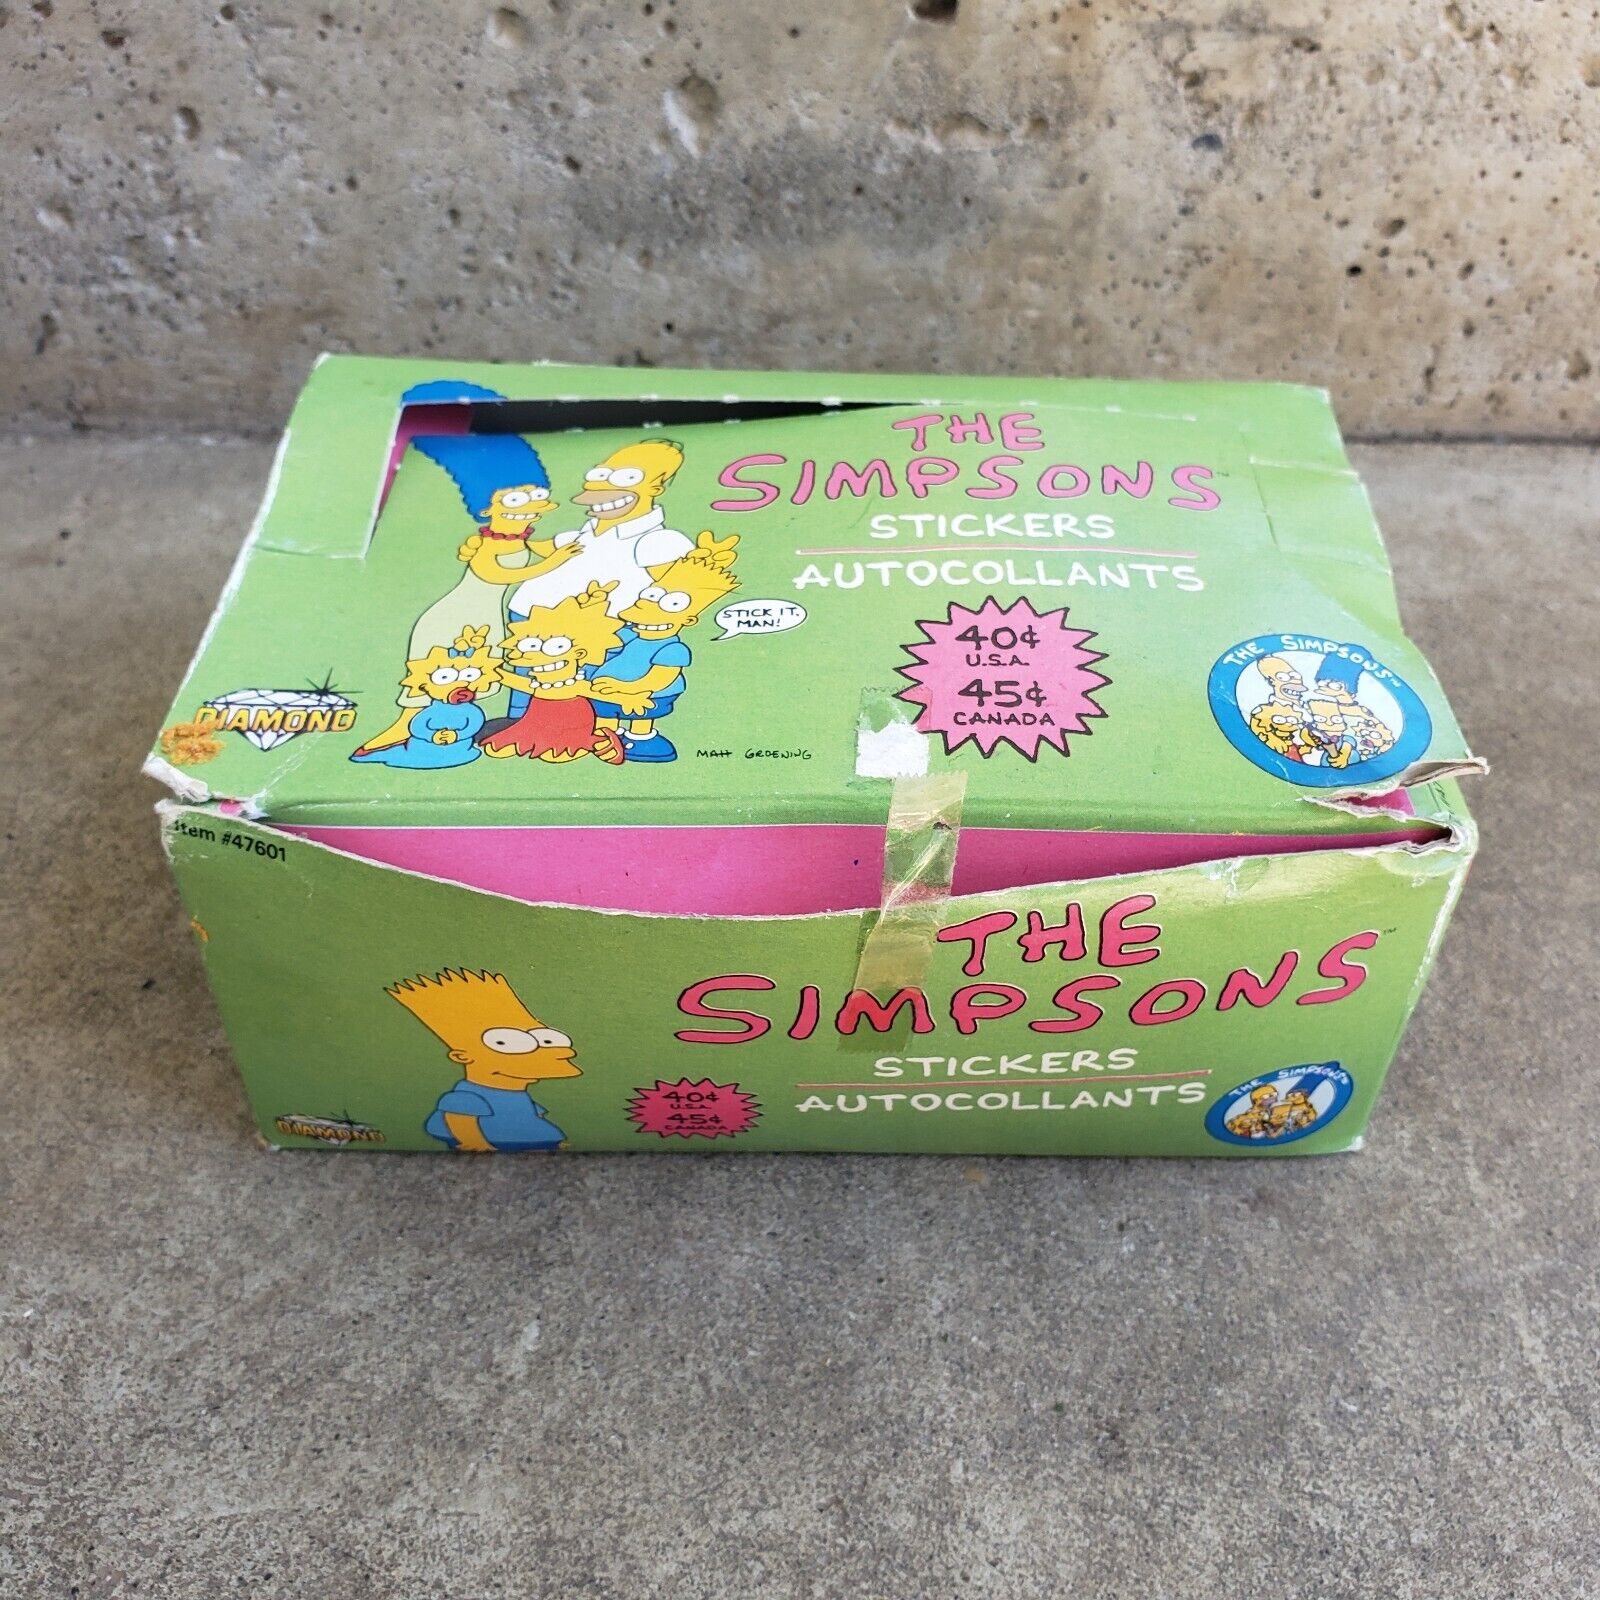 1990 Diamond The Simpsons Sticker Packs 100Pc NEW NOS #47601 Store Display Box